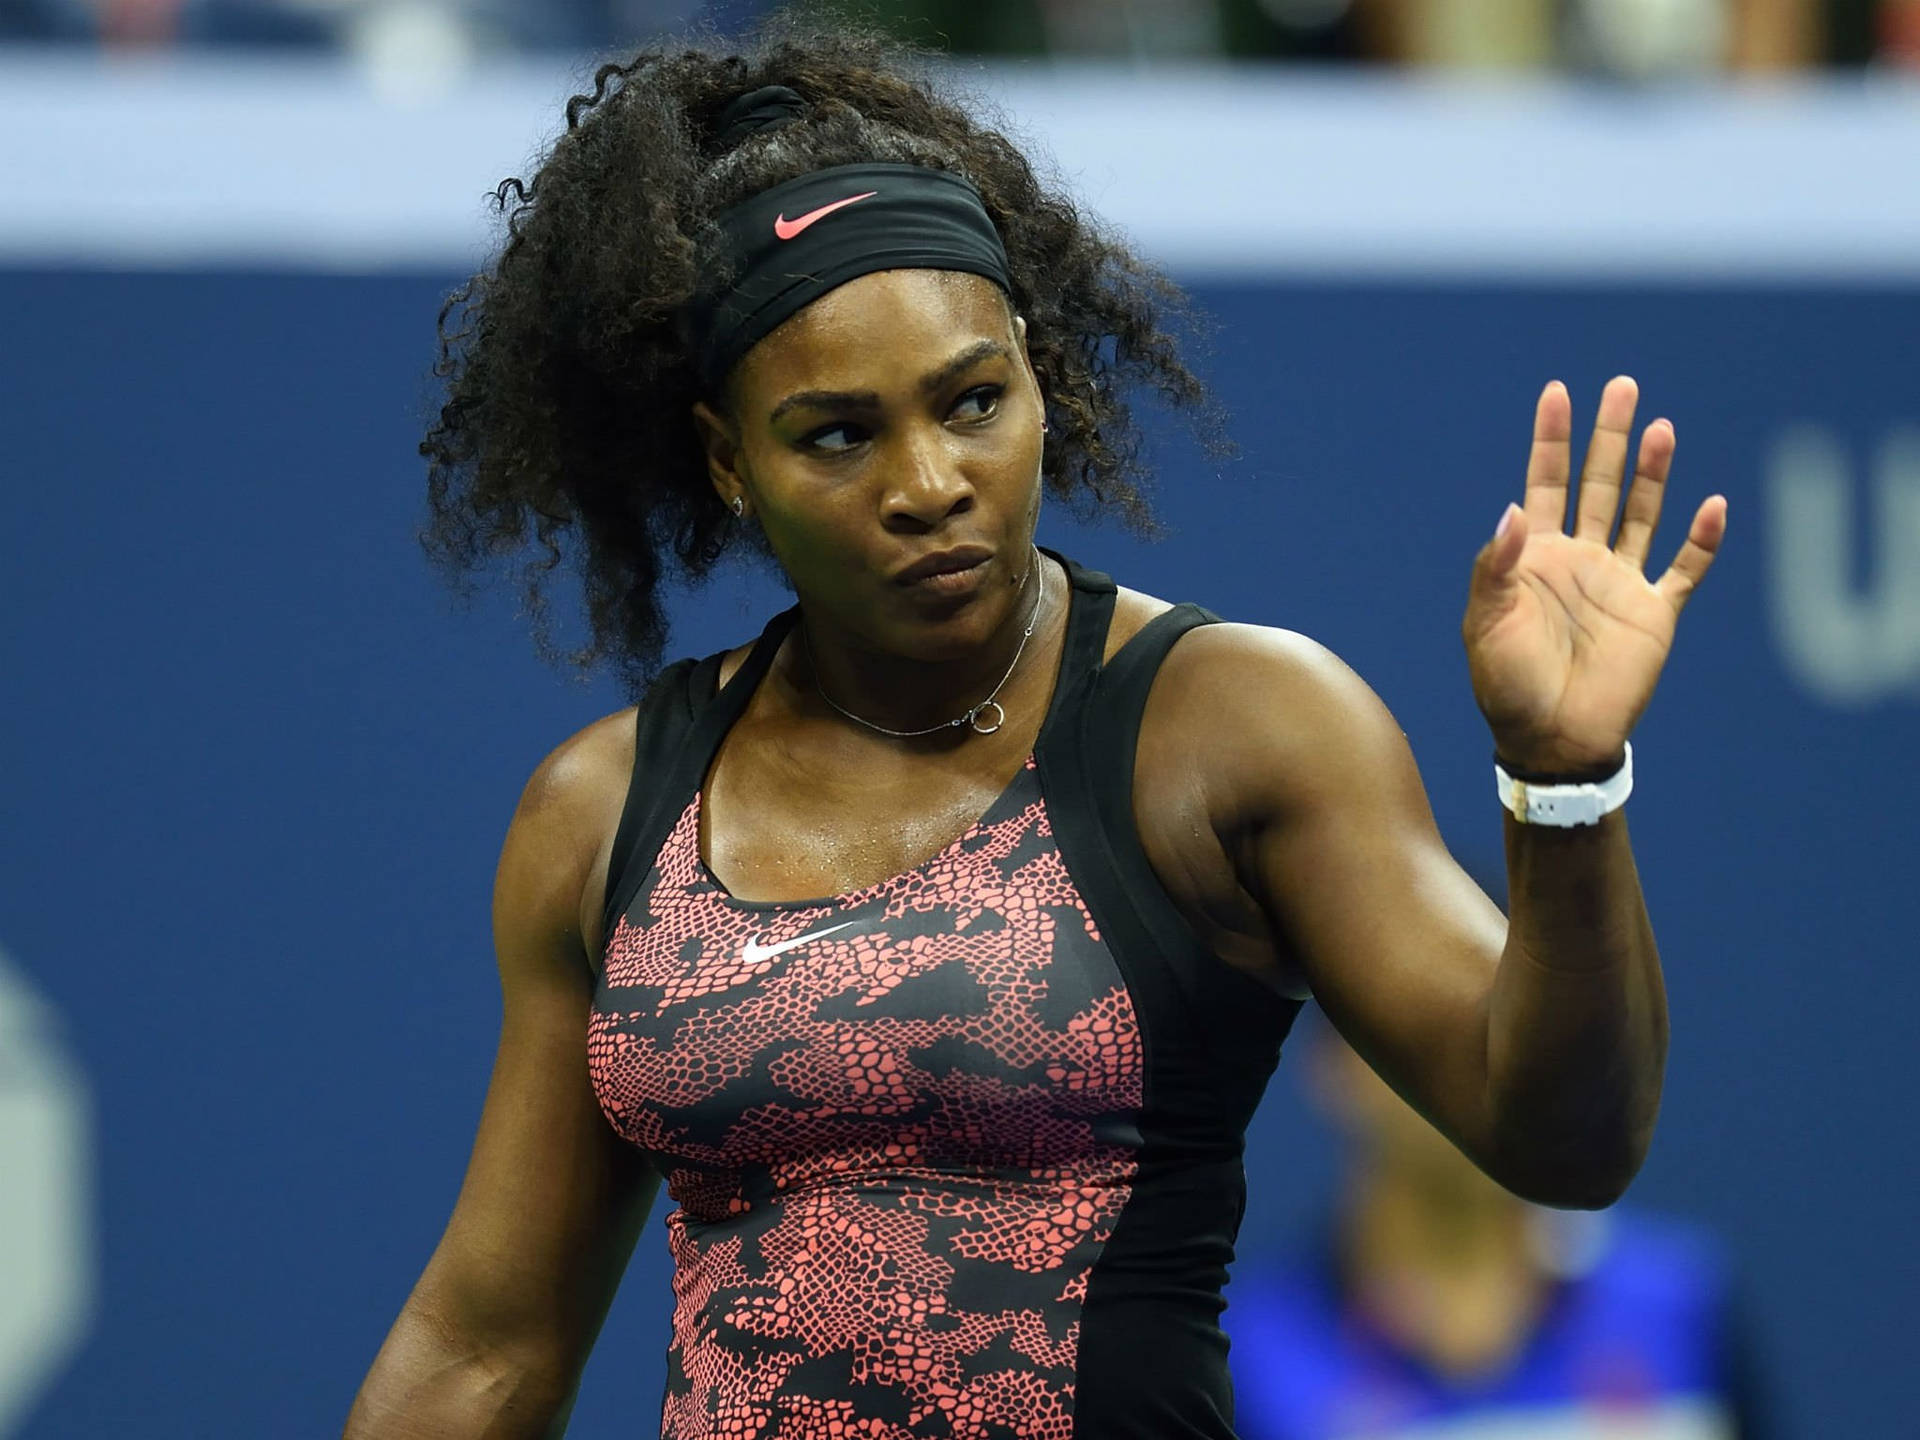 Serena Williams Palm Raise Background